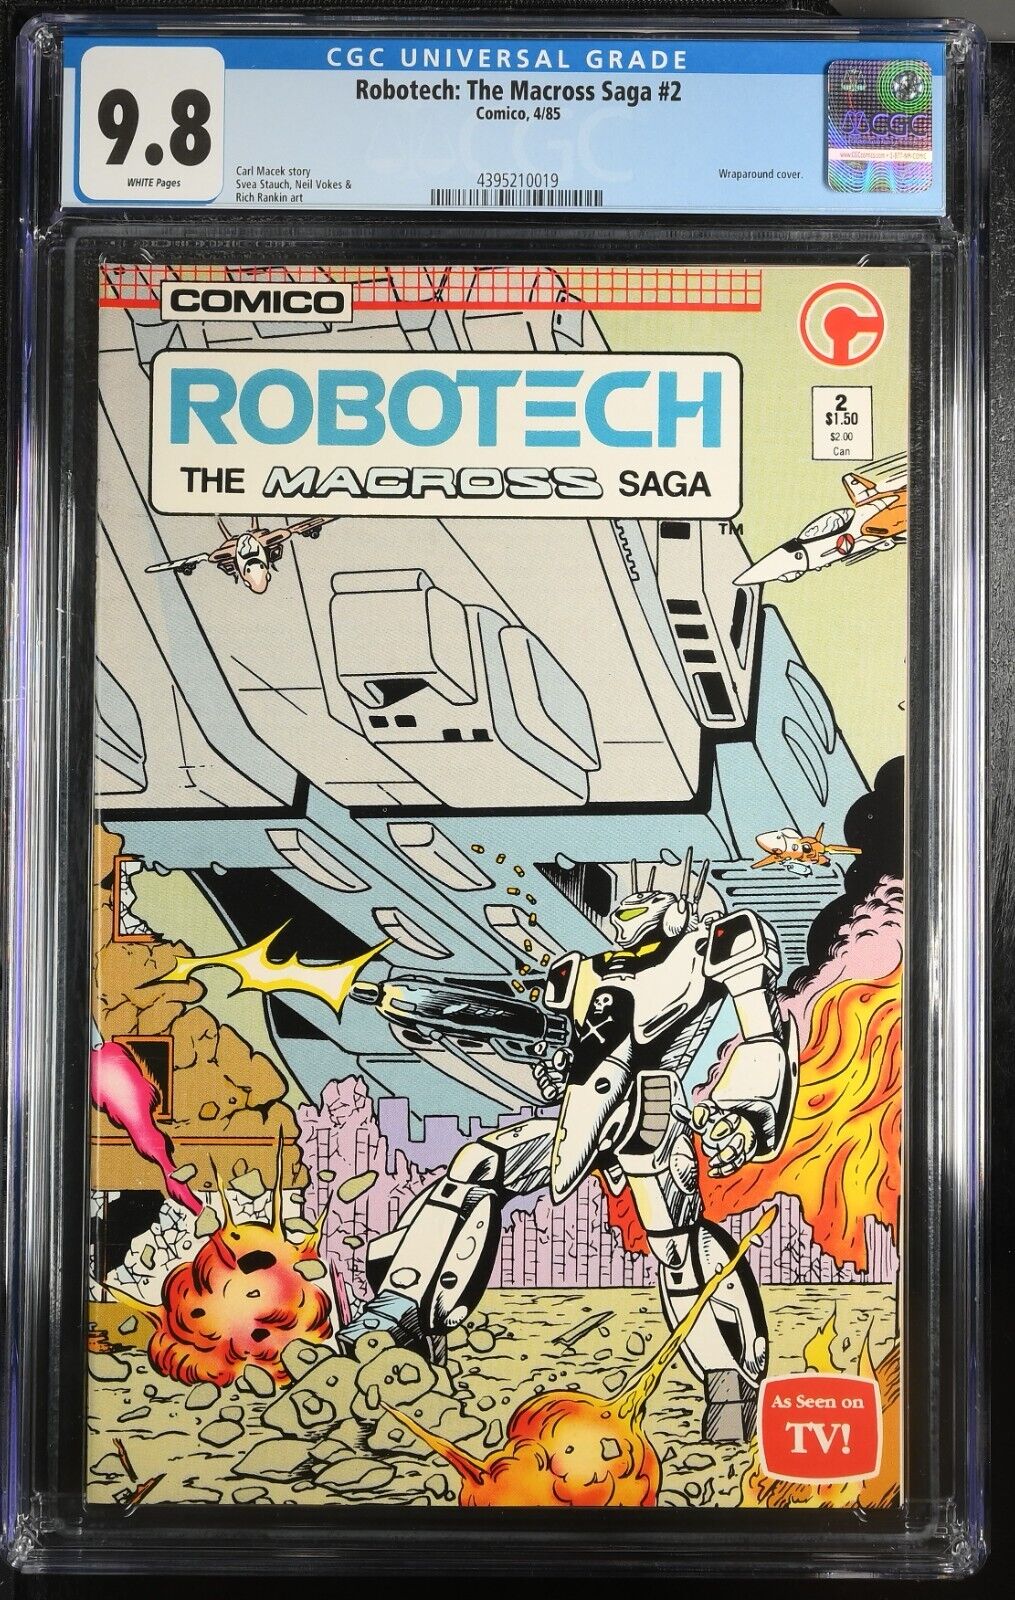 ROBOTECH: THE MACROSS SAGA #2 - CGC 9.8 - WP - NM/MT - WRAPAROUND COVER